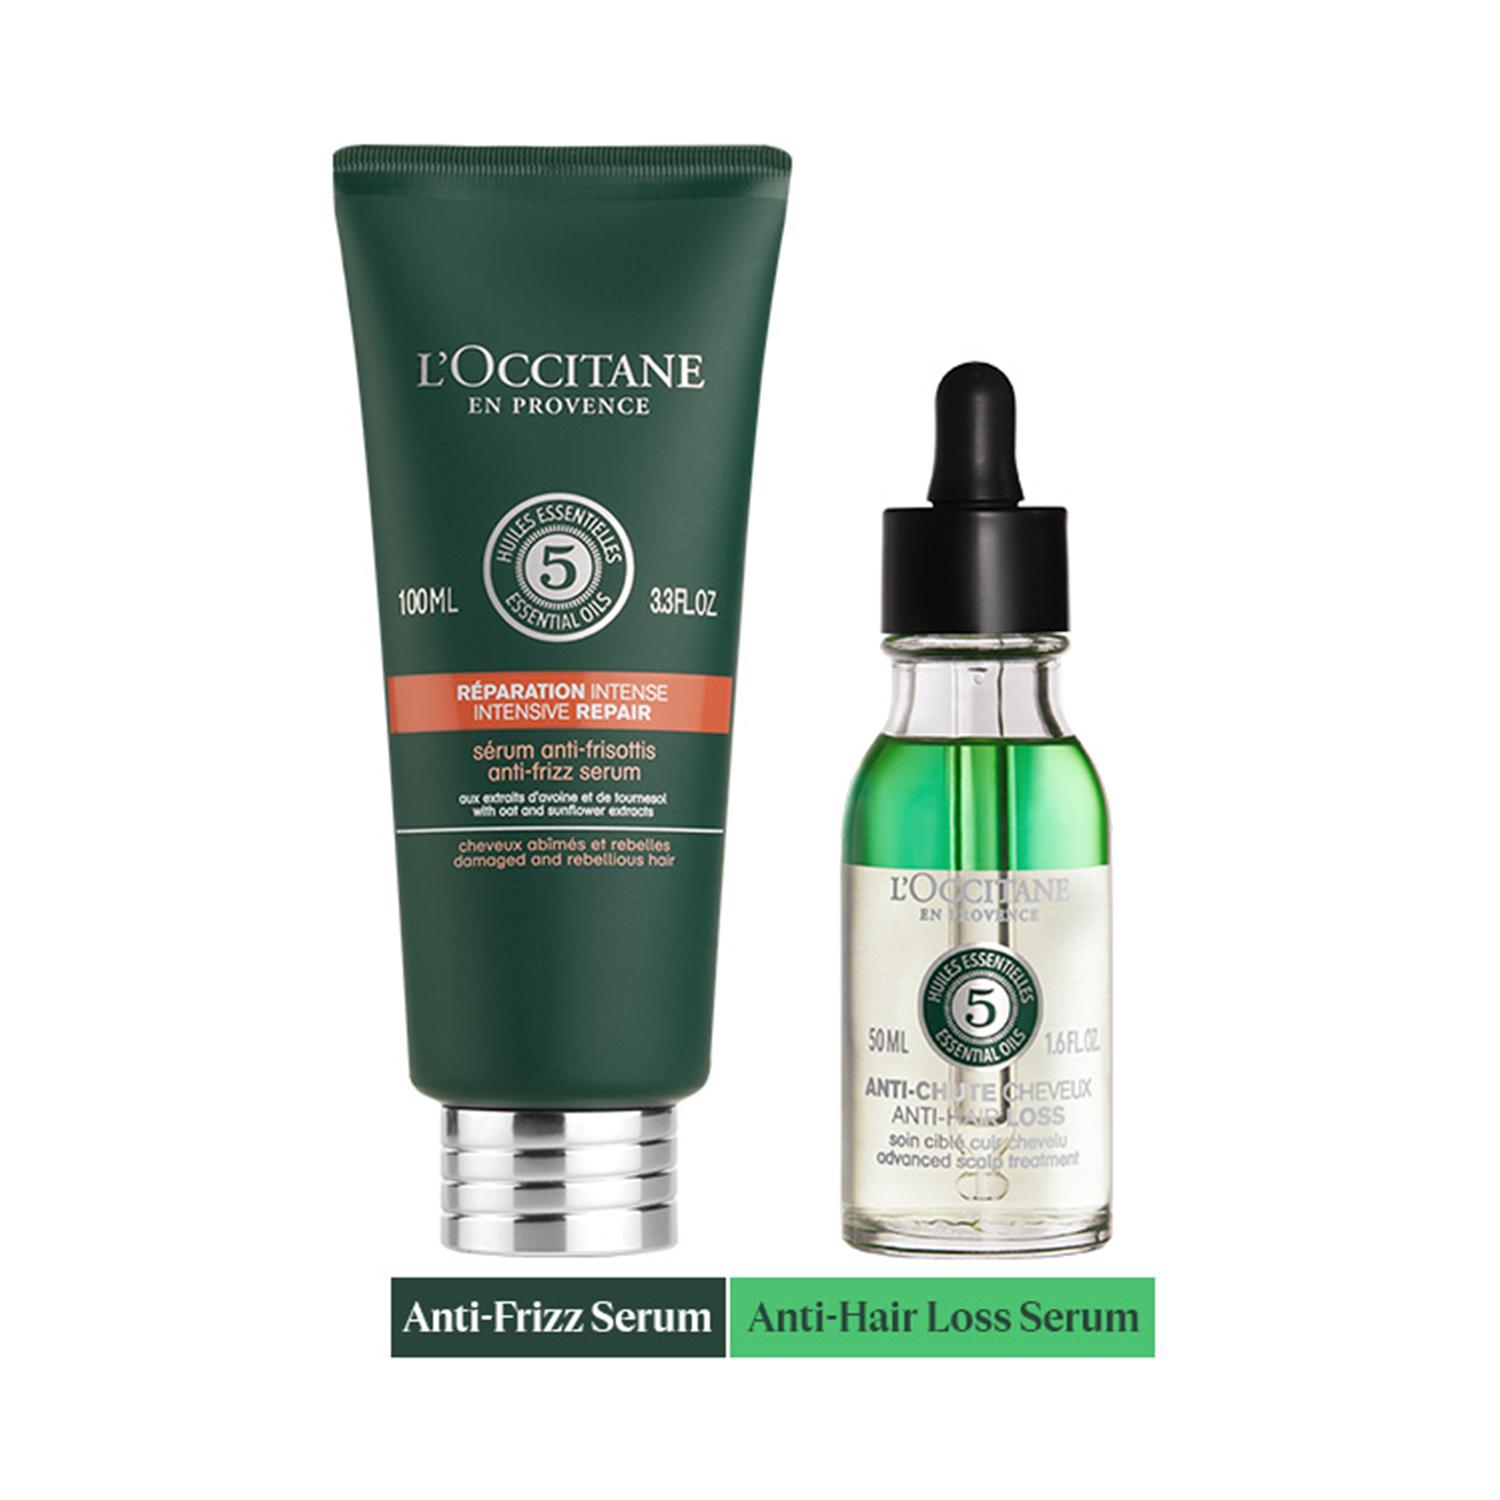 L'occitane | L'Occitane Hair Frizz Control & Anti-Hair Loss Serum Duo Combo